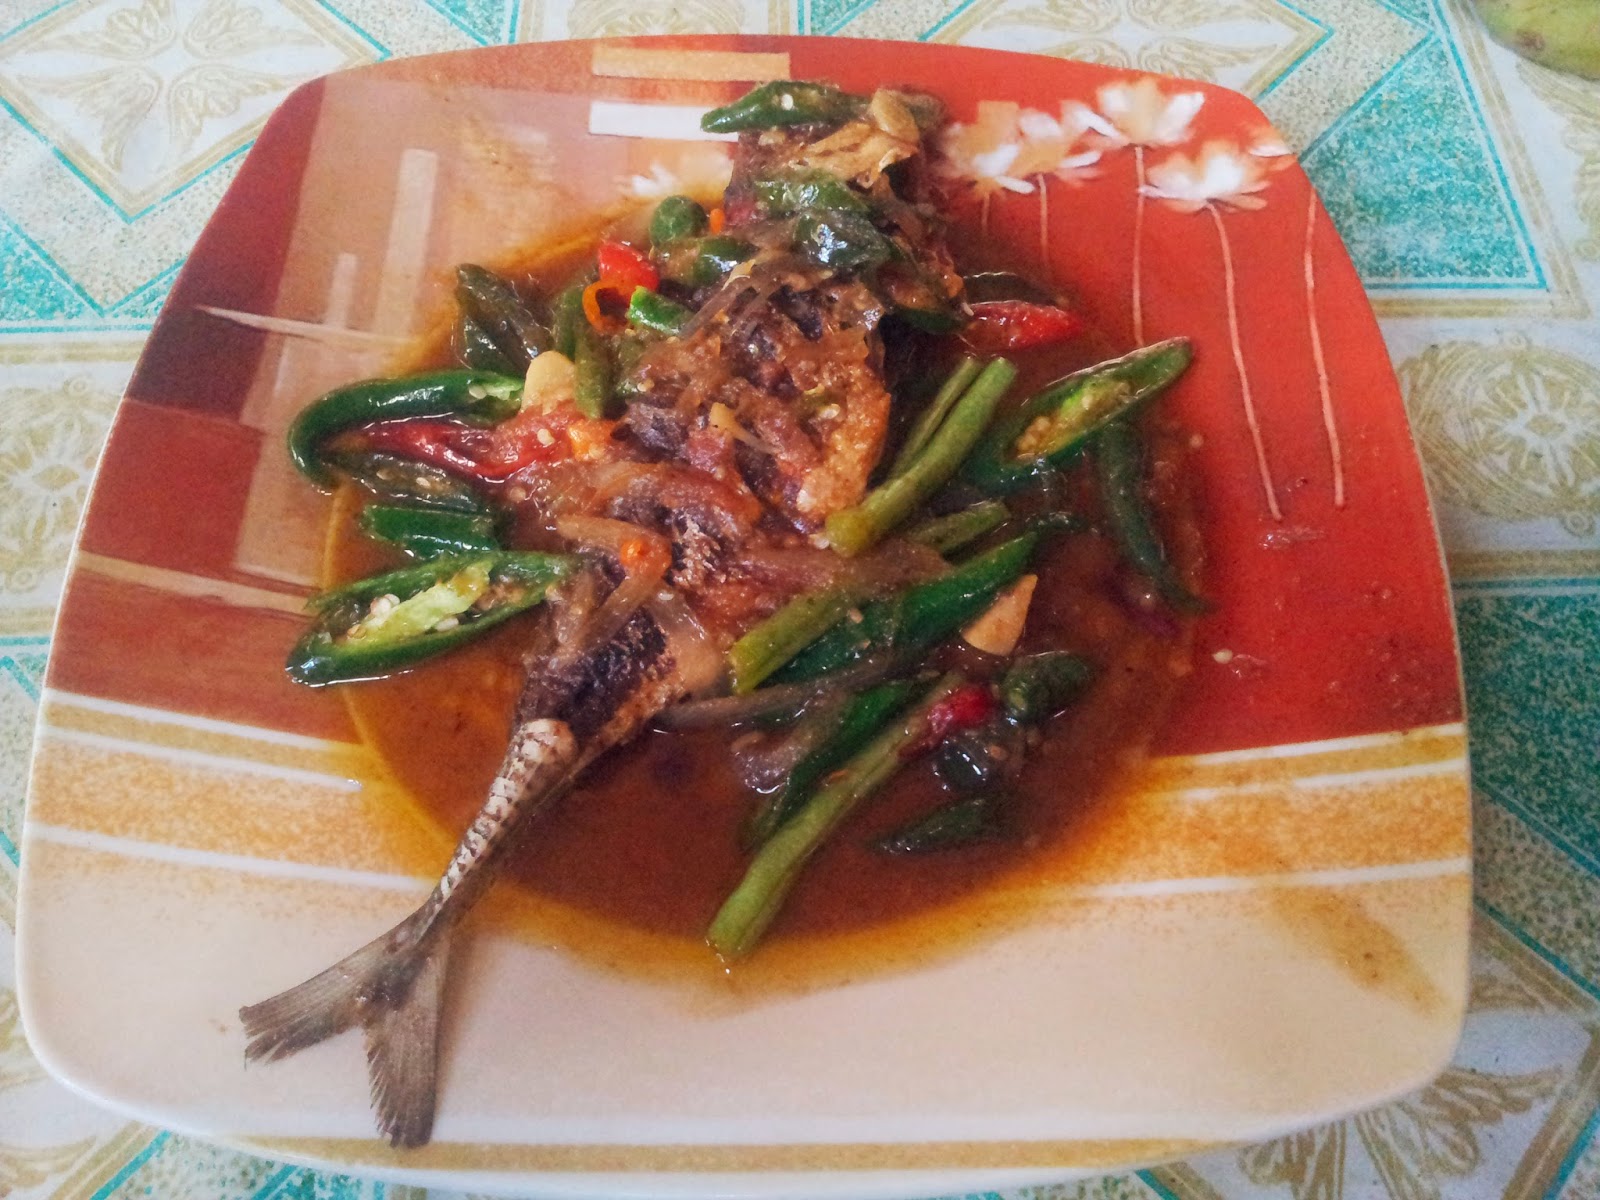 Skipjack tuna with sour and sweet sauce at Goa Cemara